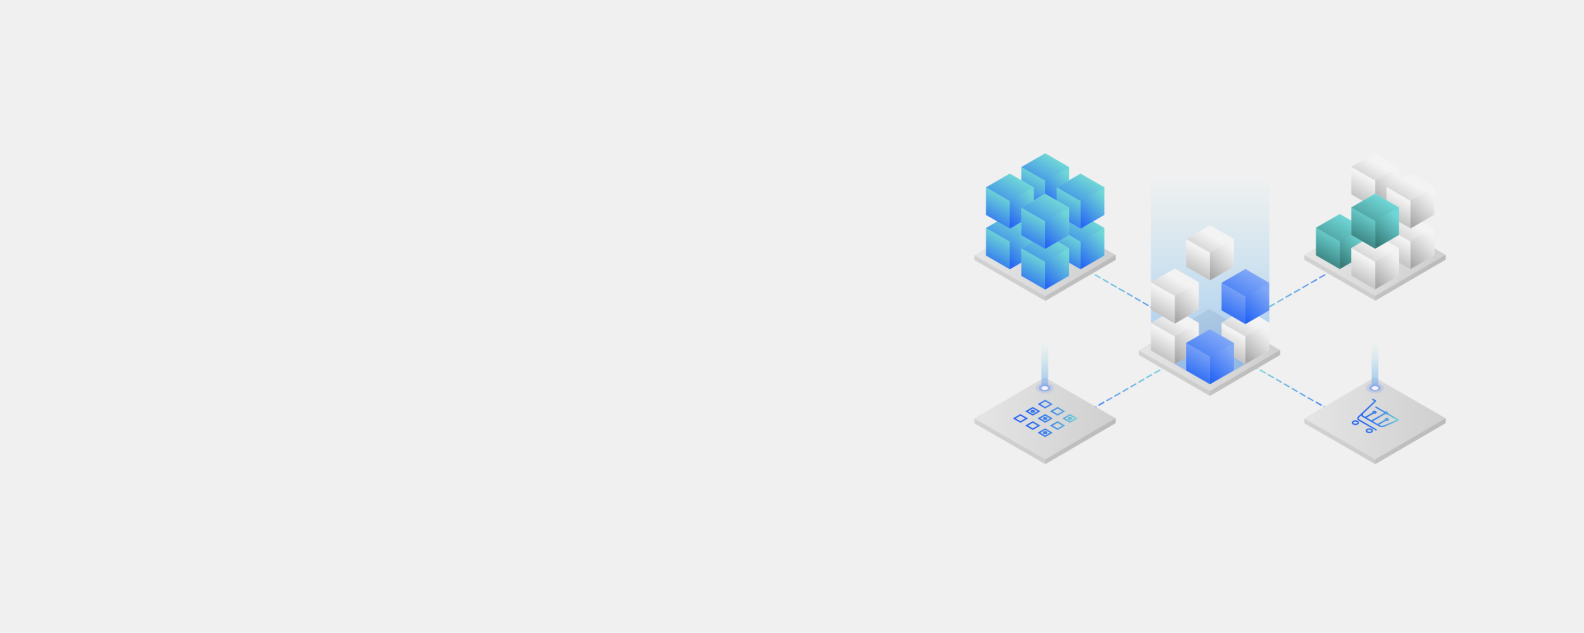 Isometric illustration for Websphere Application Server